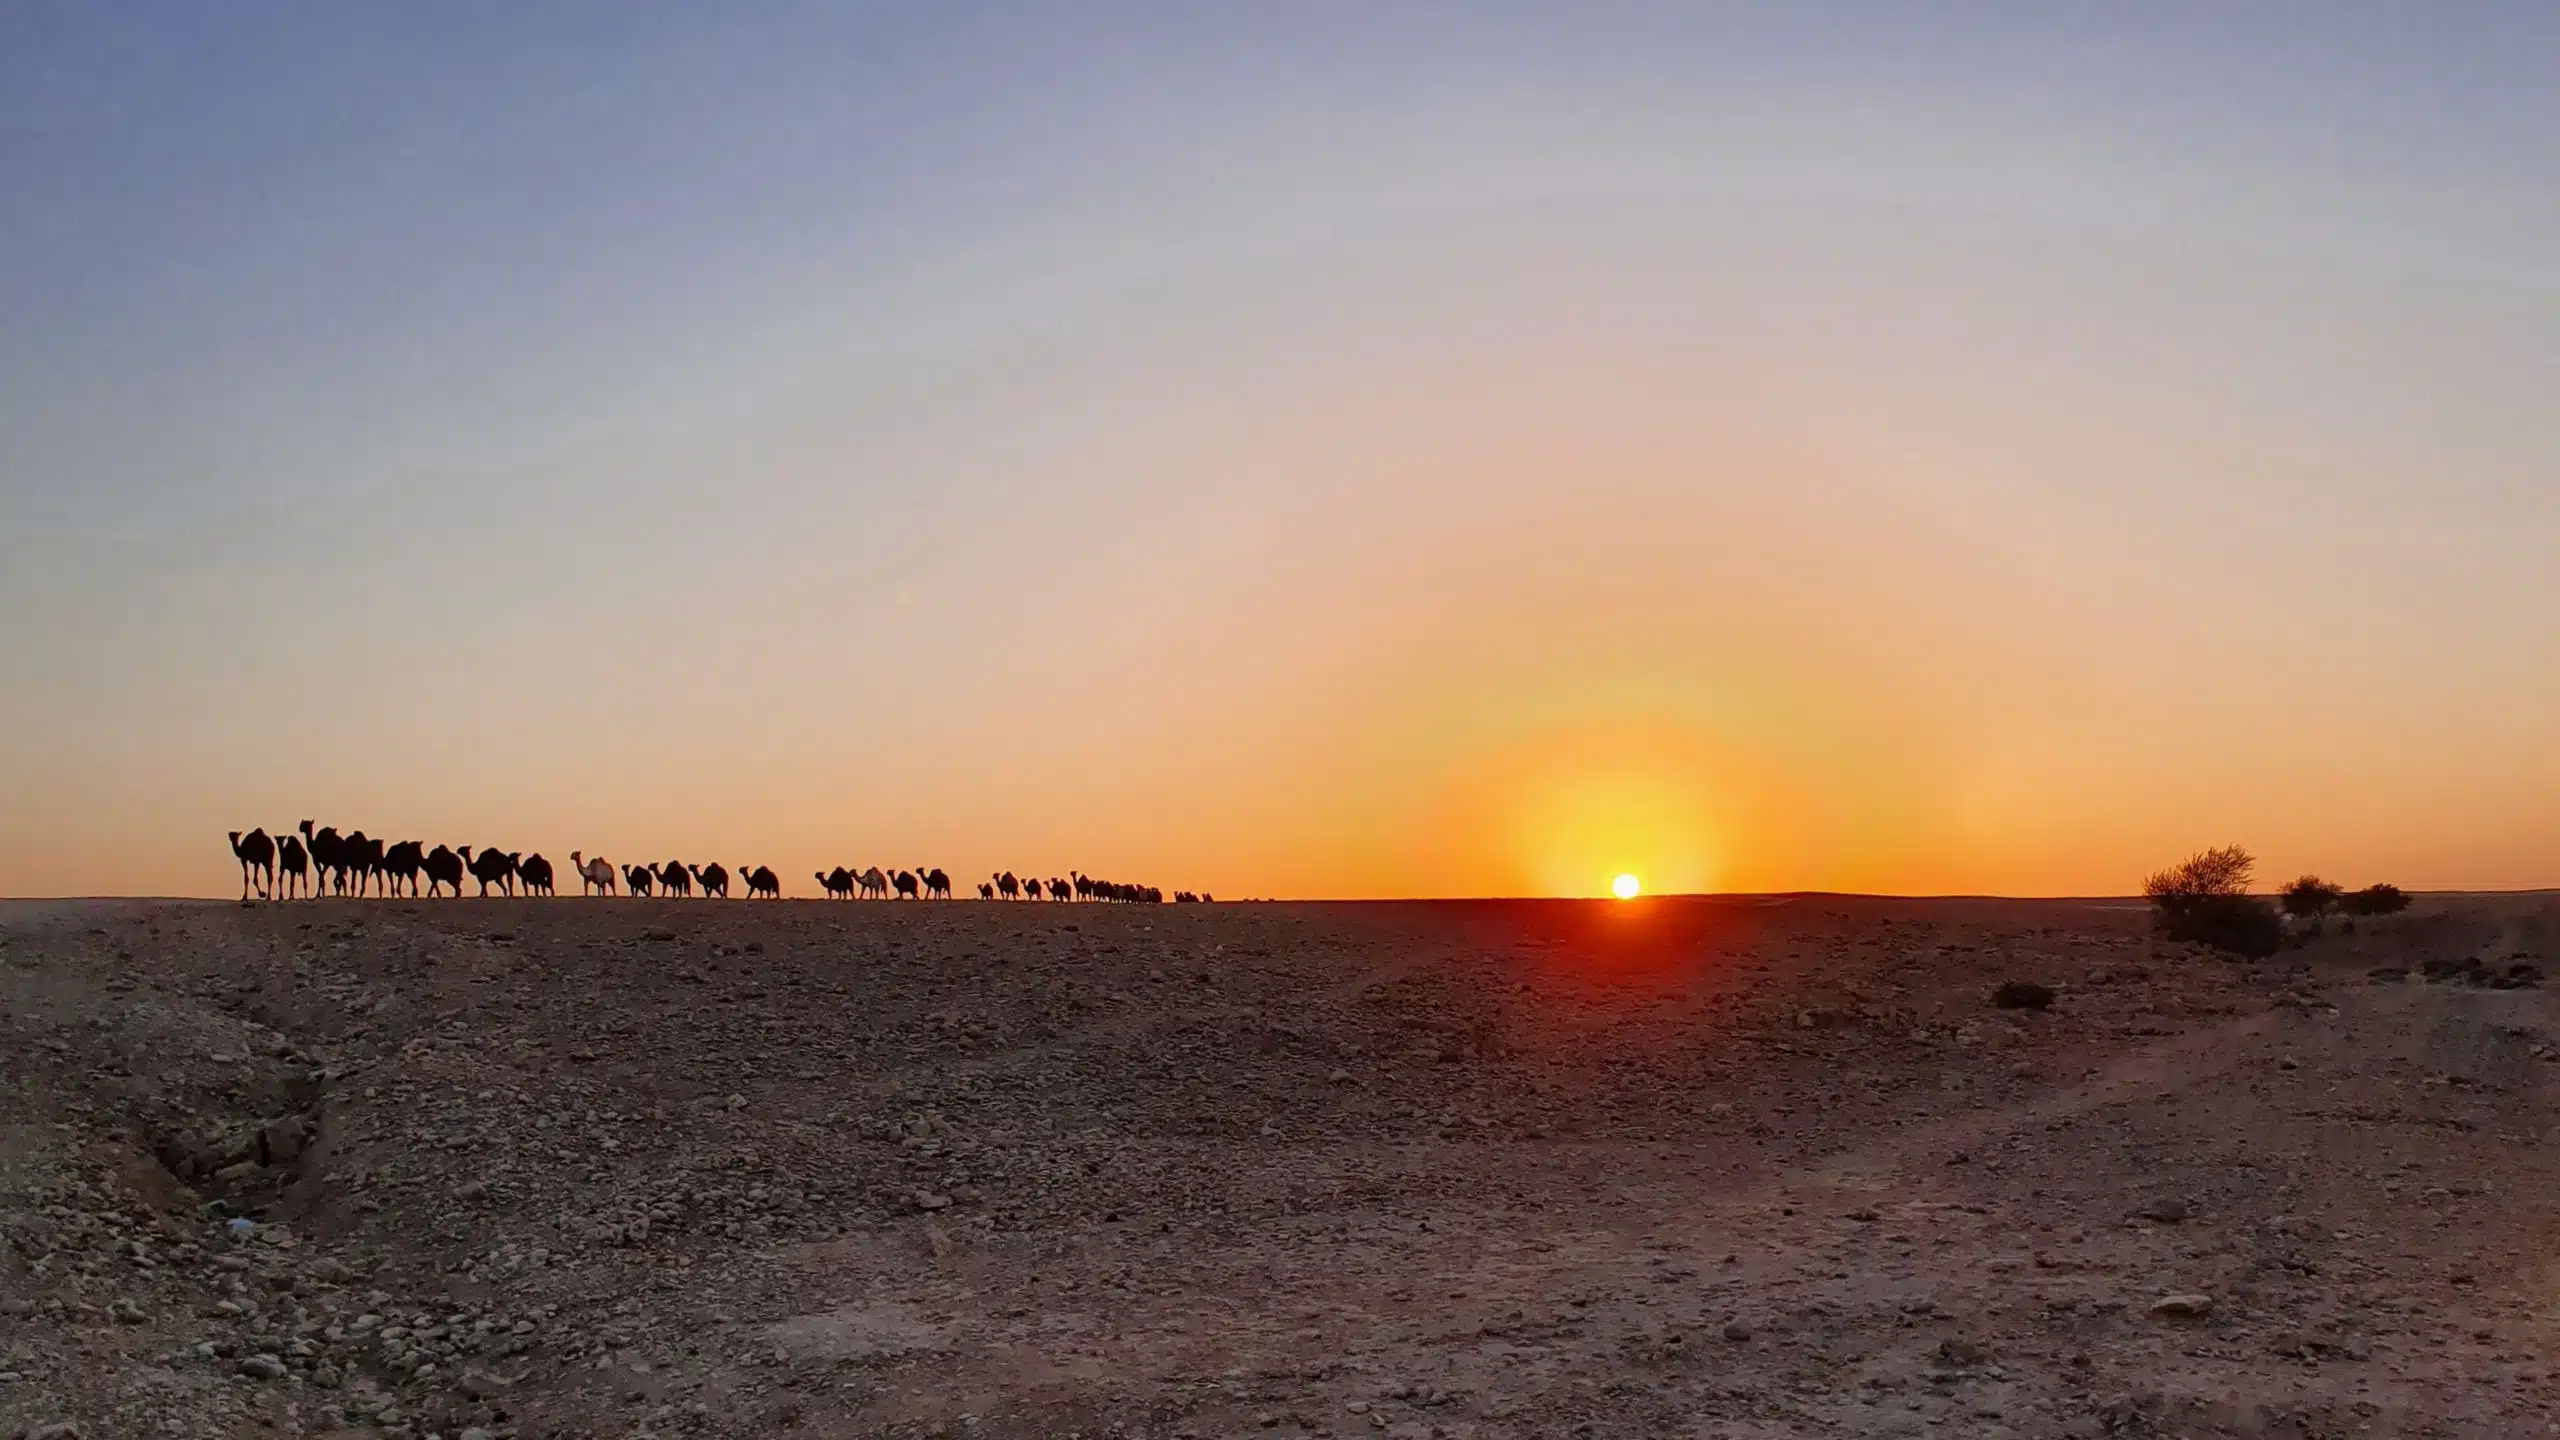 beautiful sunset at the edge of the world, Riyadh, Saudi-Arabia.